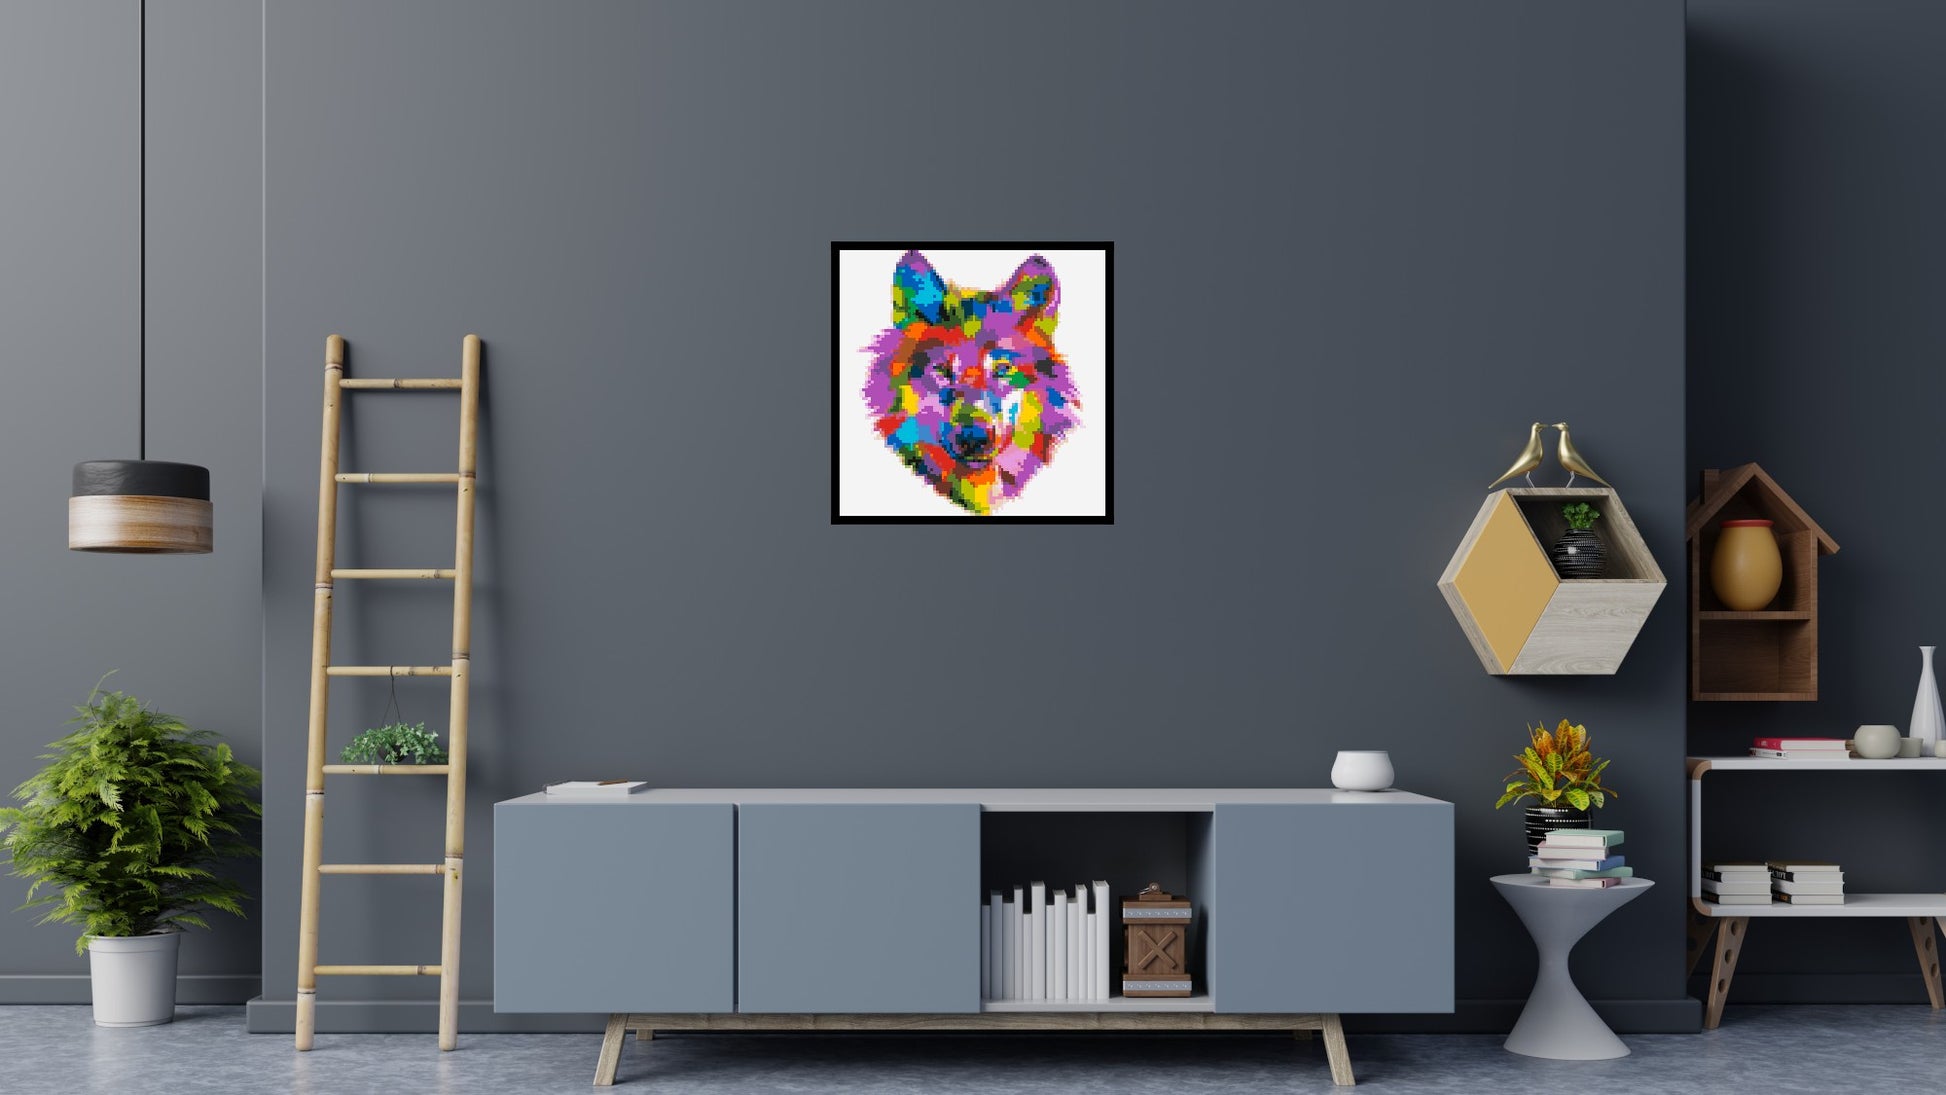 Wolf Colourful Pop Art - Brick Art Mosaic Kit 4x4 scene with frame